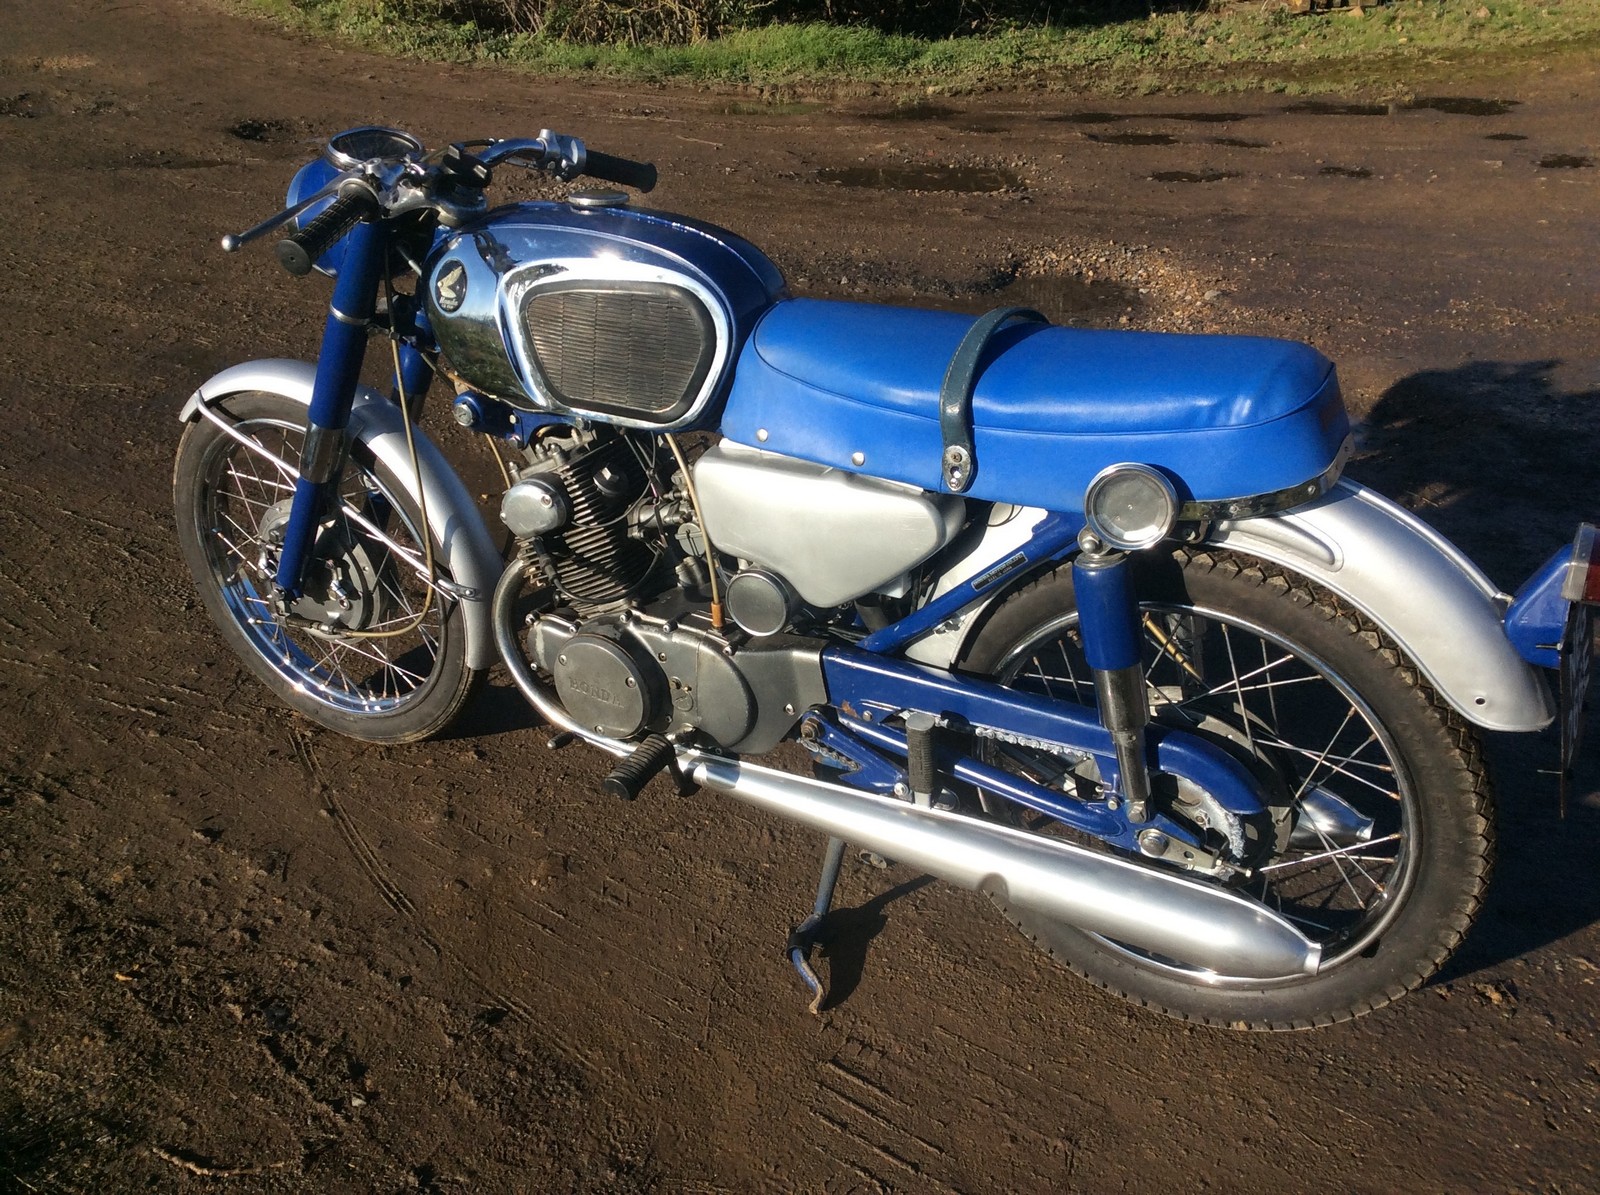 1967 Honda CB160SS 160cc - Image 2 of 4